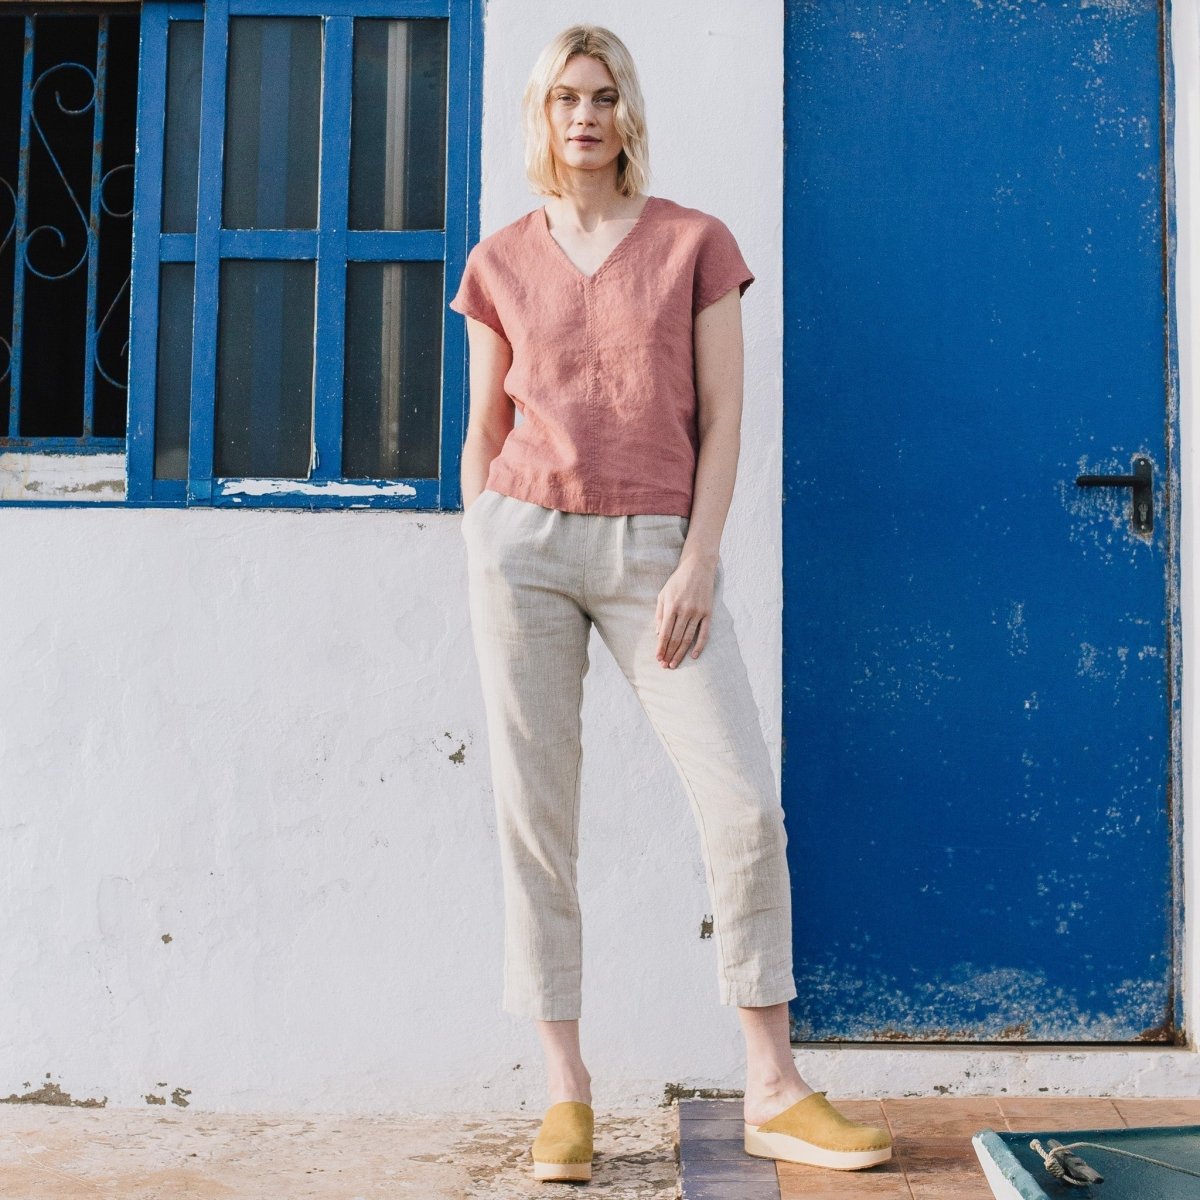 Mira Linen Drawstring Pants • Shop American Threads Women's Trendy